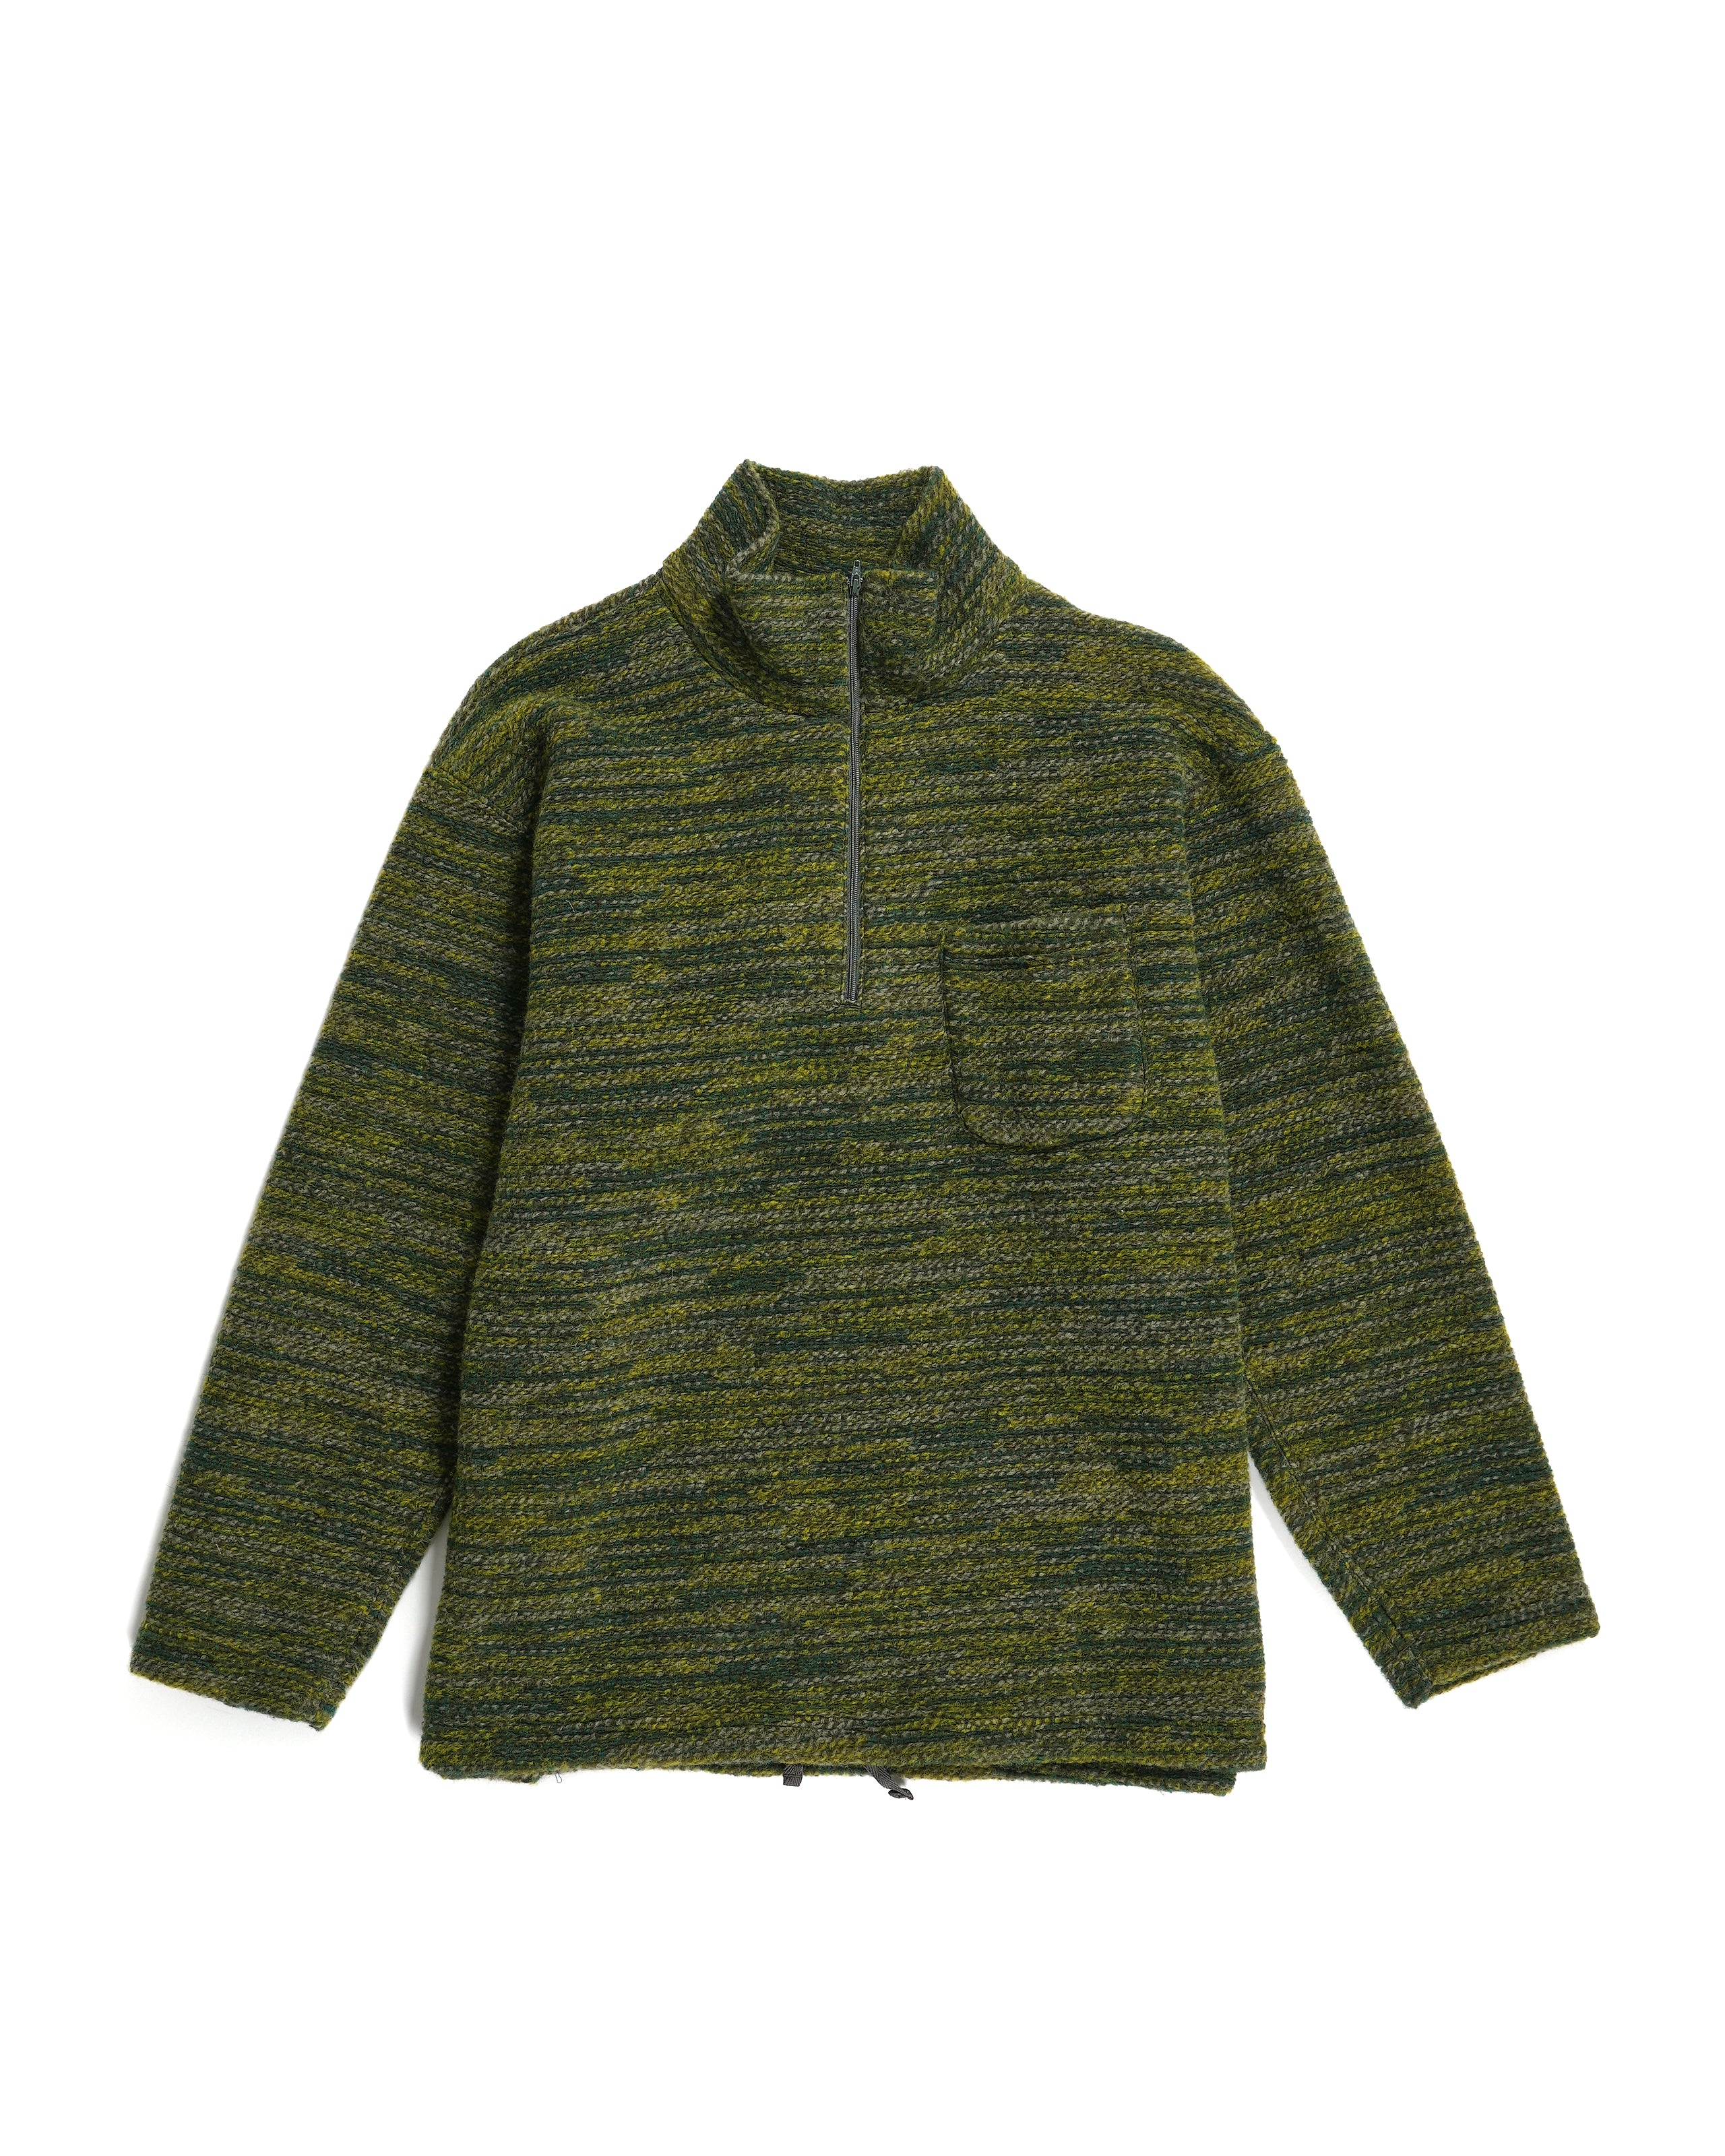 Zip Mock Neck - Green Poly Wool Melange Knit